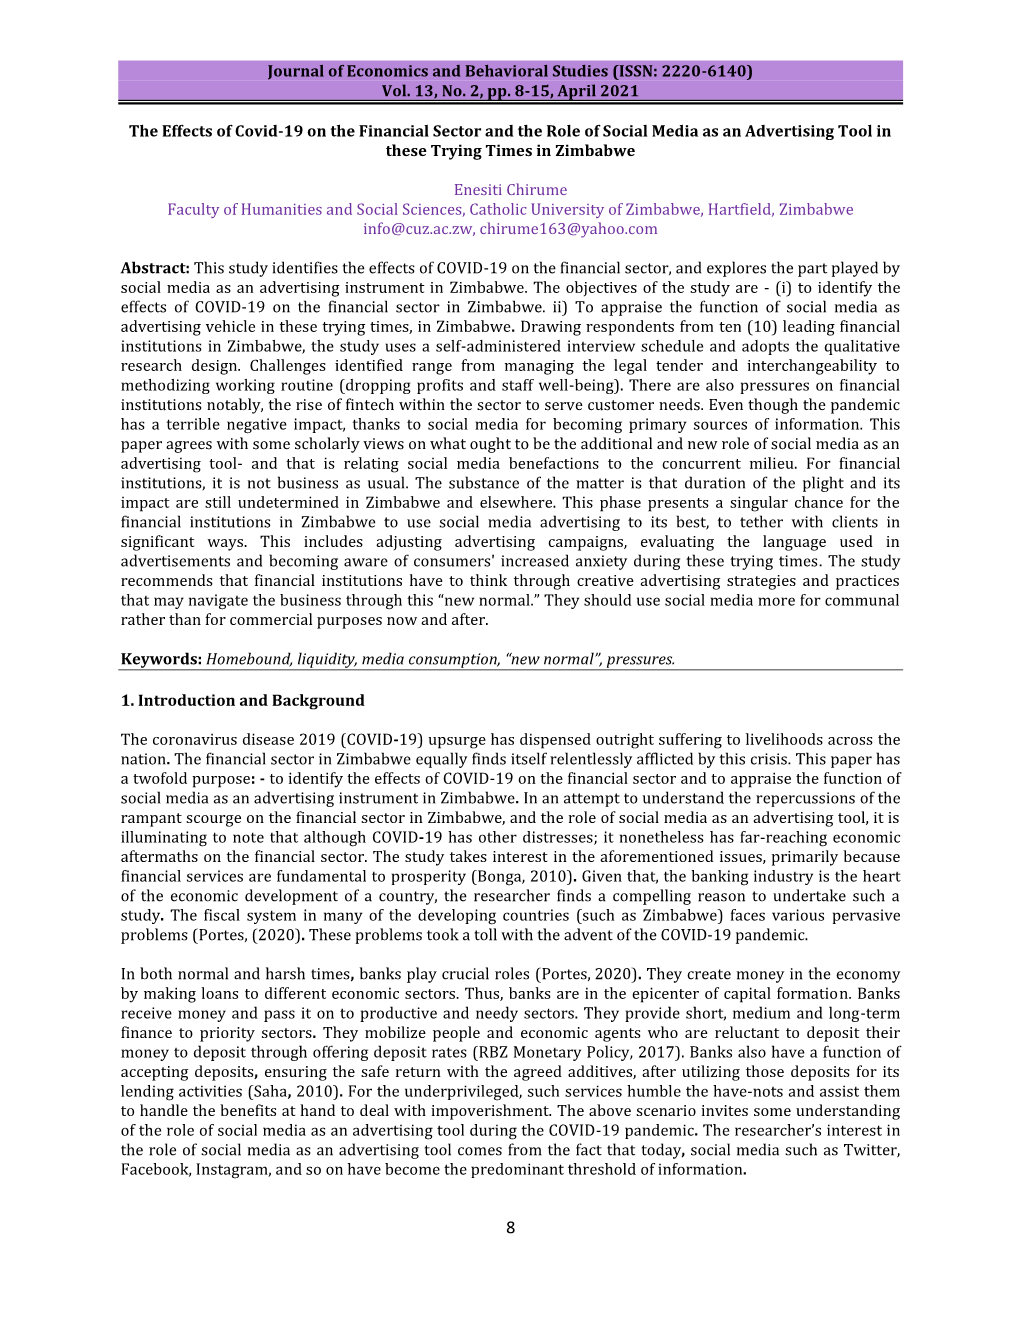 Journal of Economics and Behavioral Studies (ISSN: 2220-6140) Vol